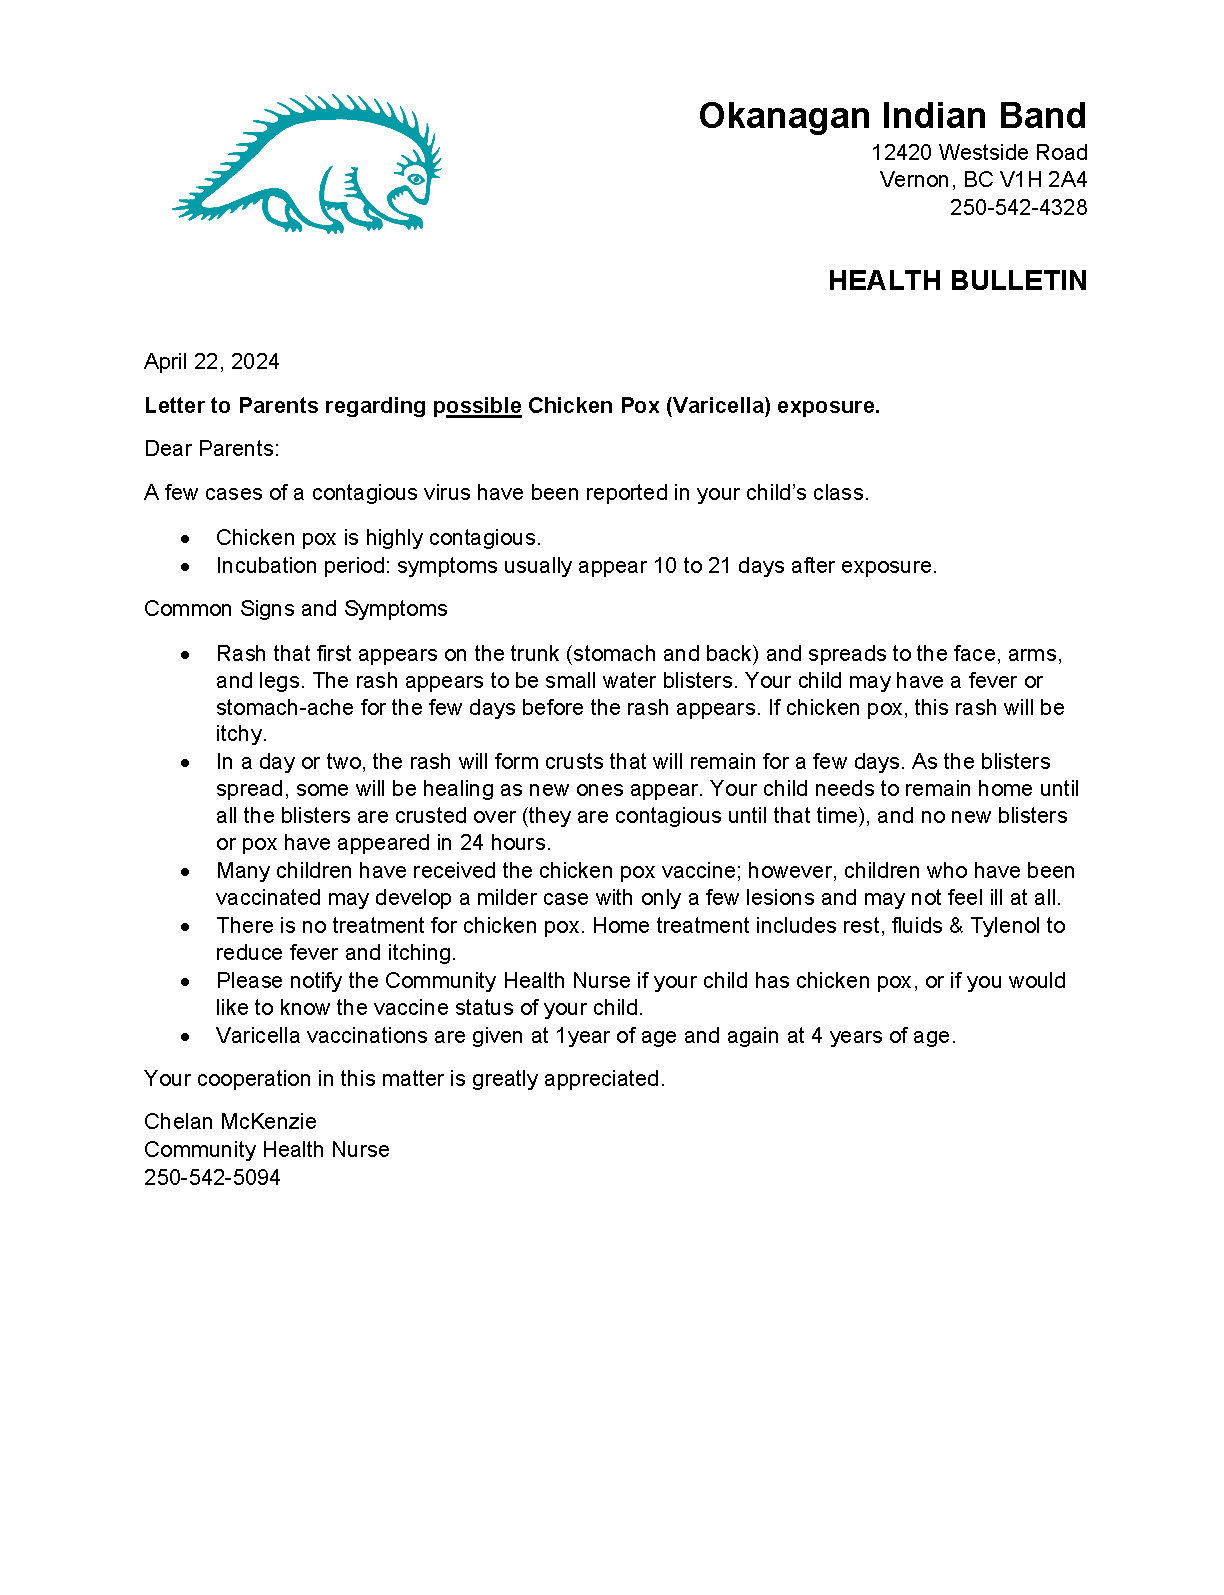 Letter to Parents Regarding possible Chicken Pox exposure